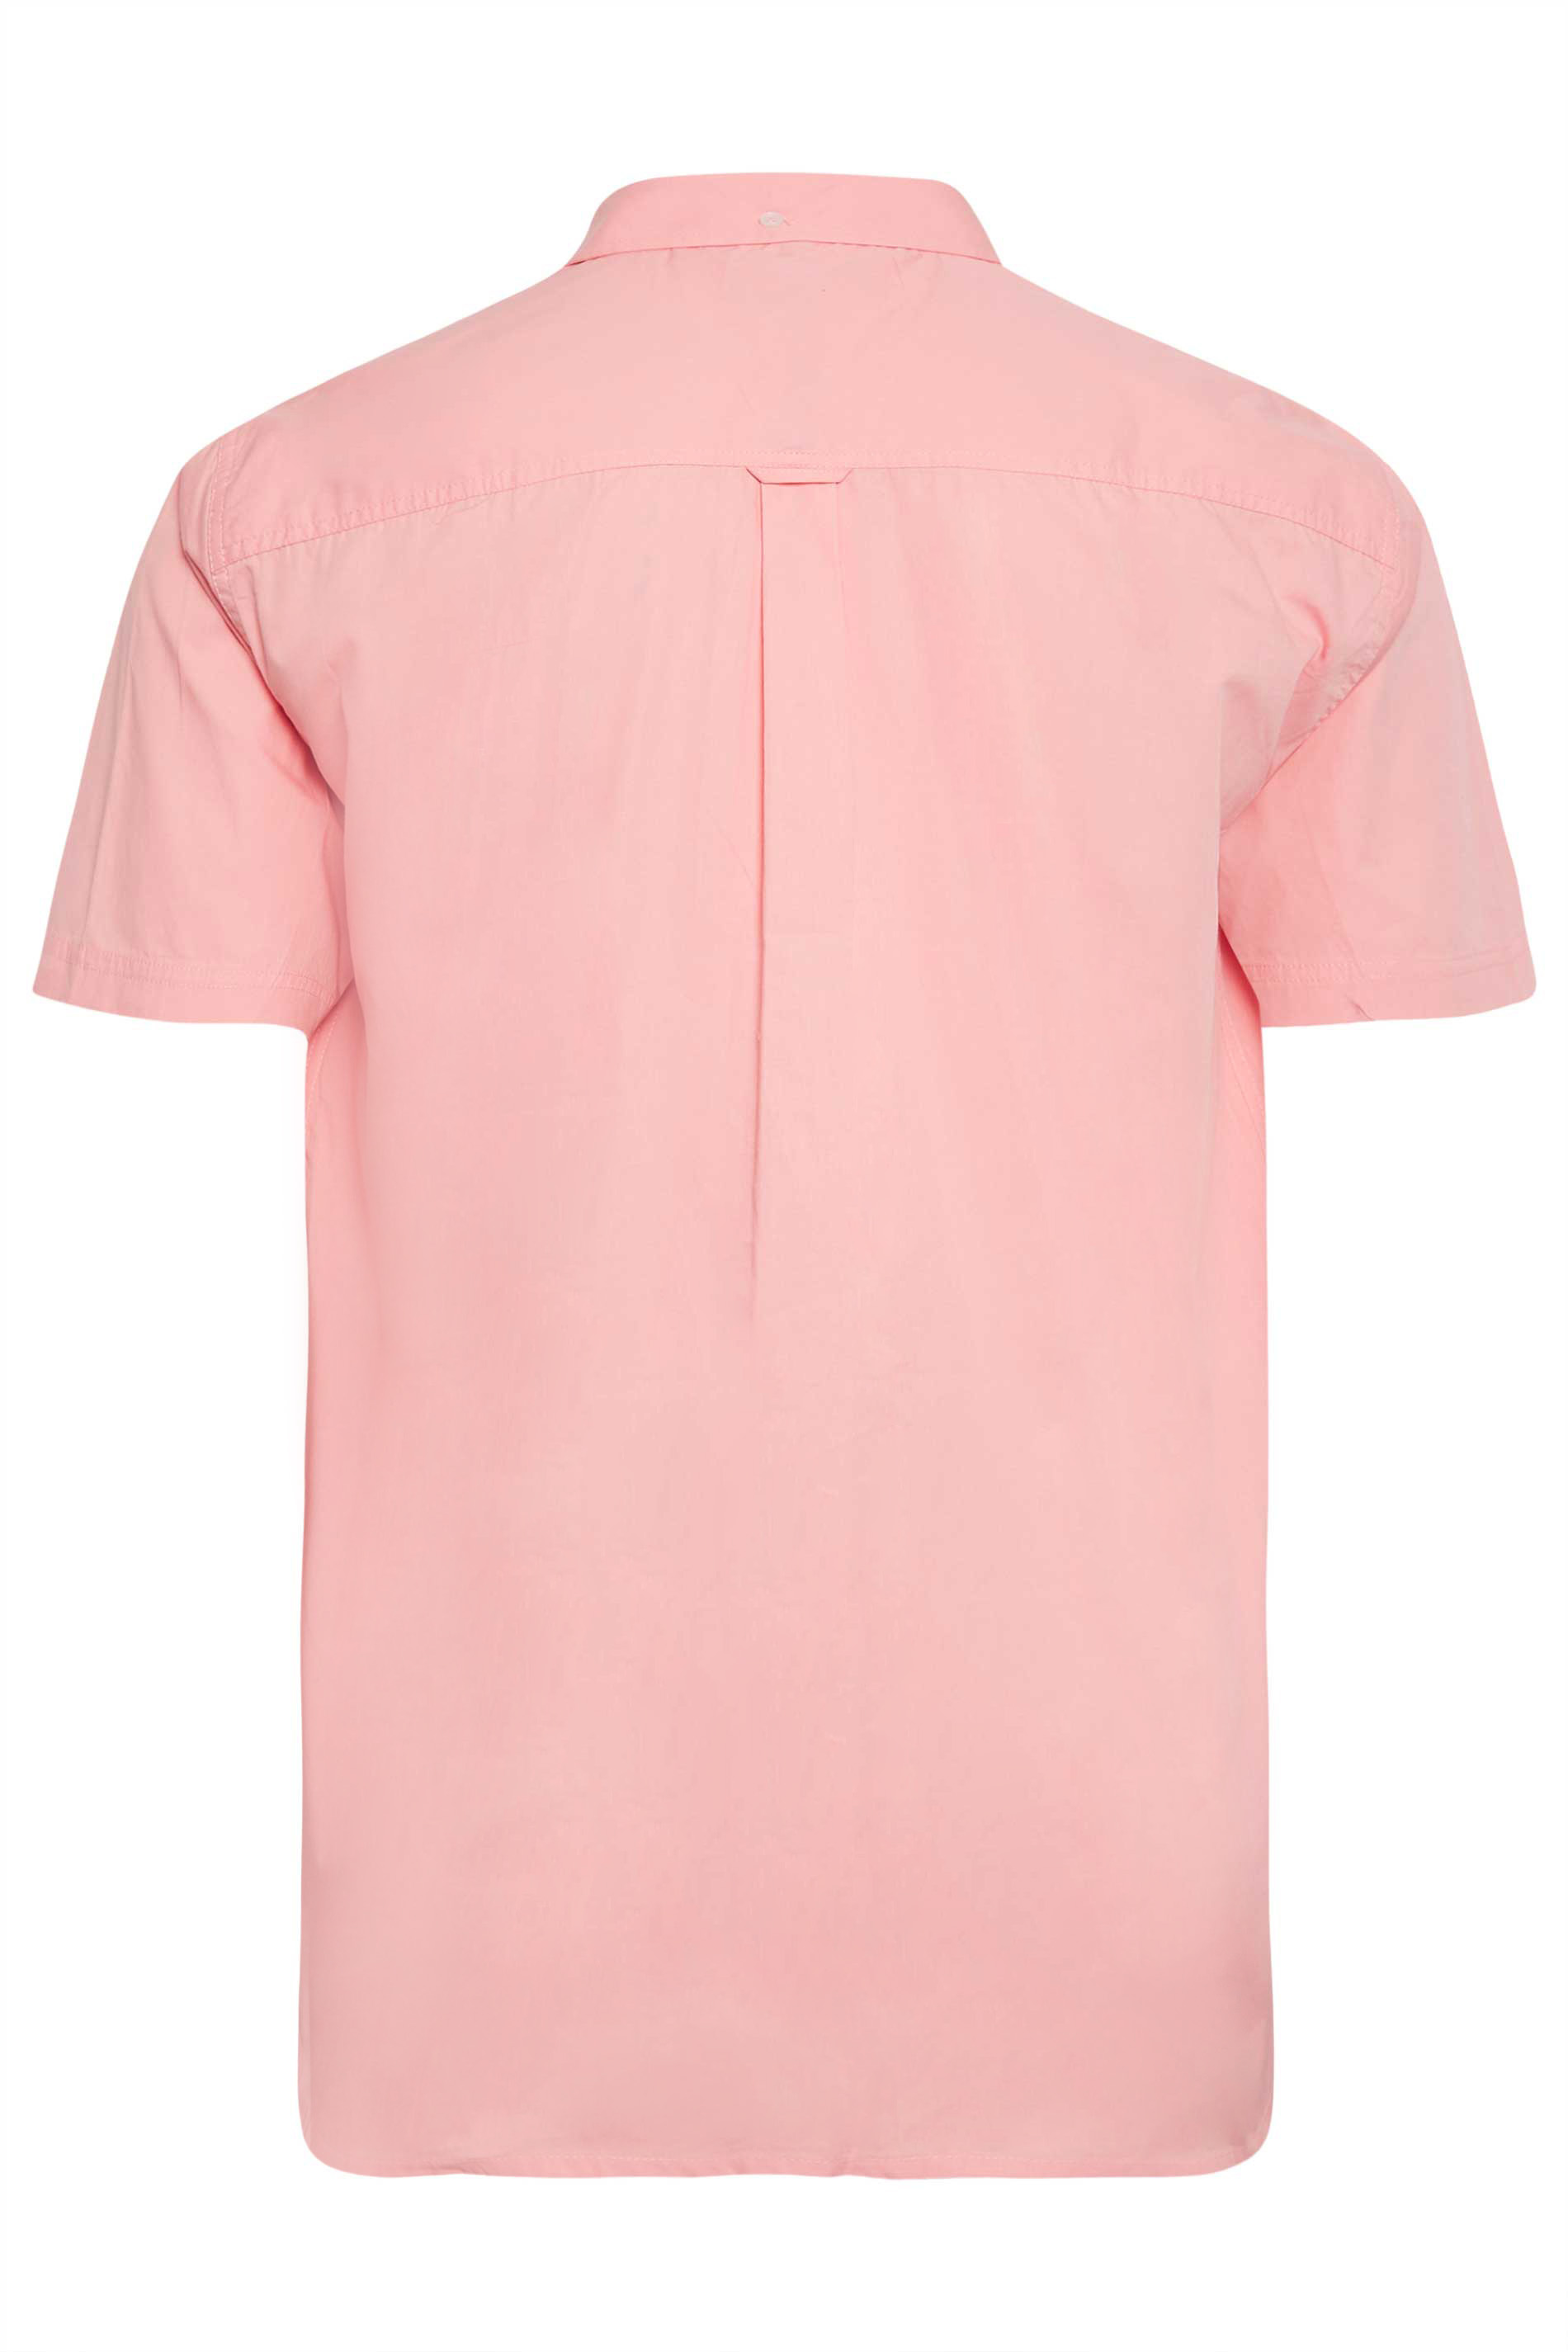 BadRhino Big & Tall Pink Poplin Shirt | BadRhino 3